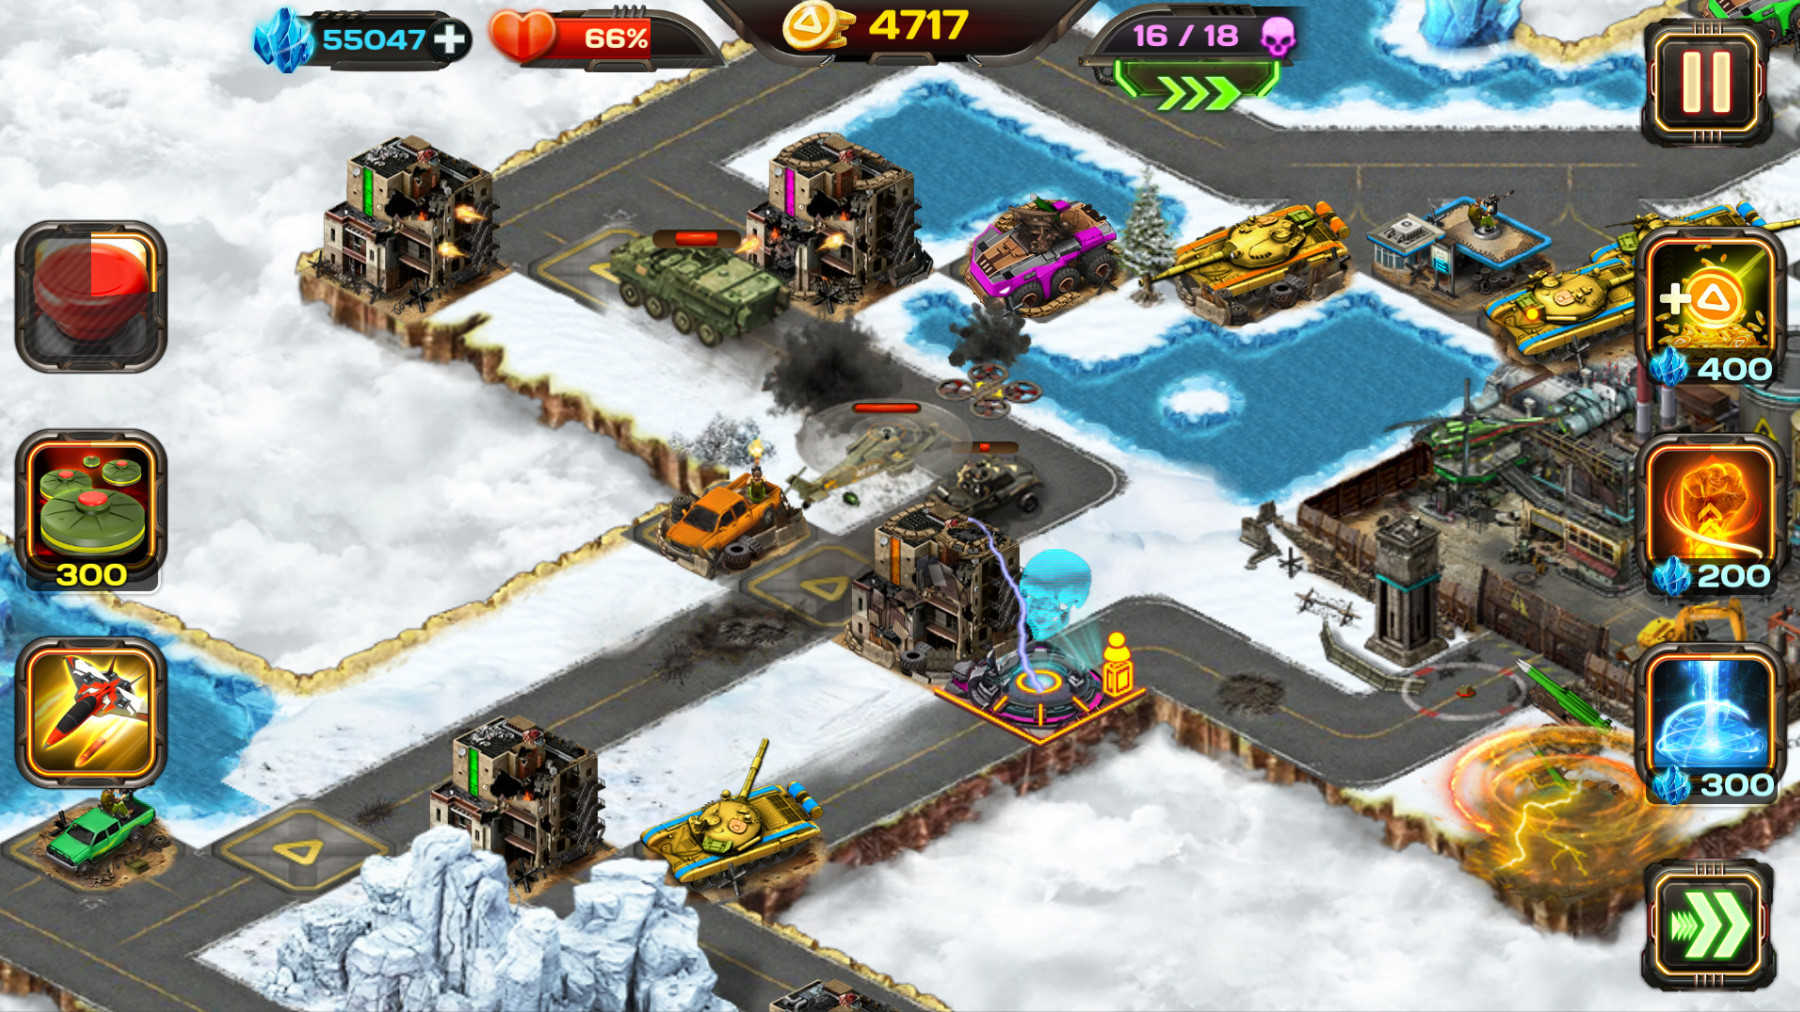 🔥 Download AOD Art of Defense ampmdash Tower Defense Game 2.8.9